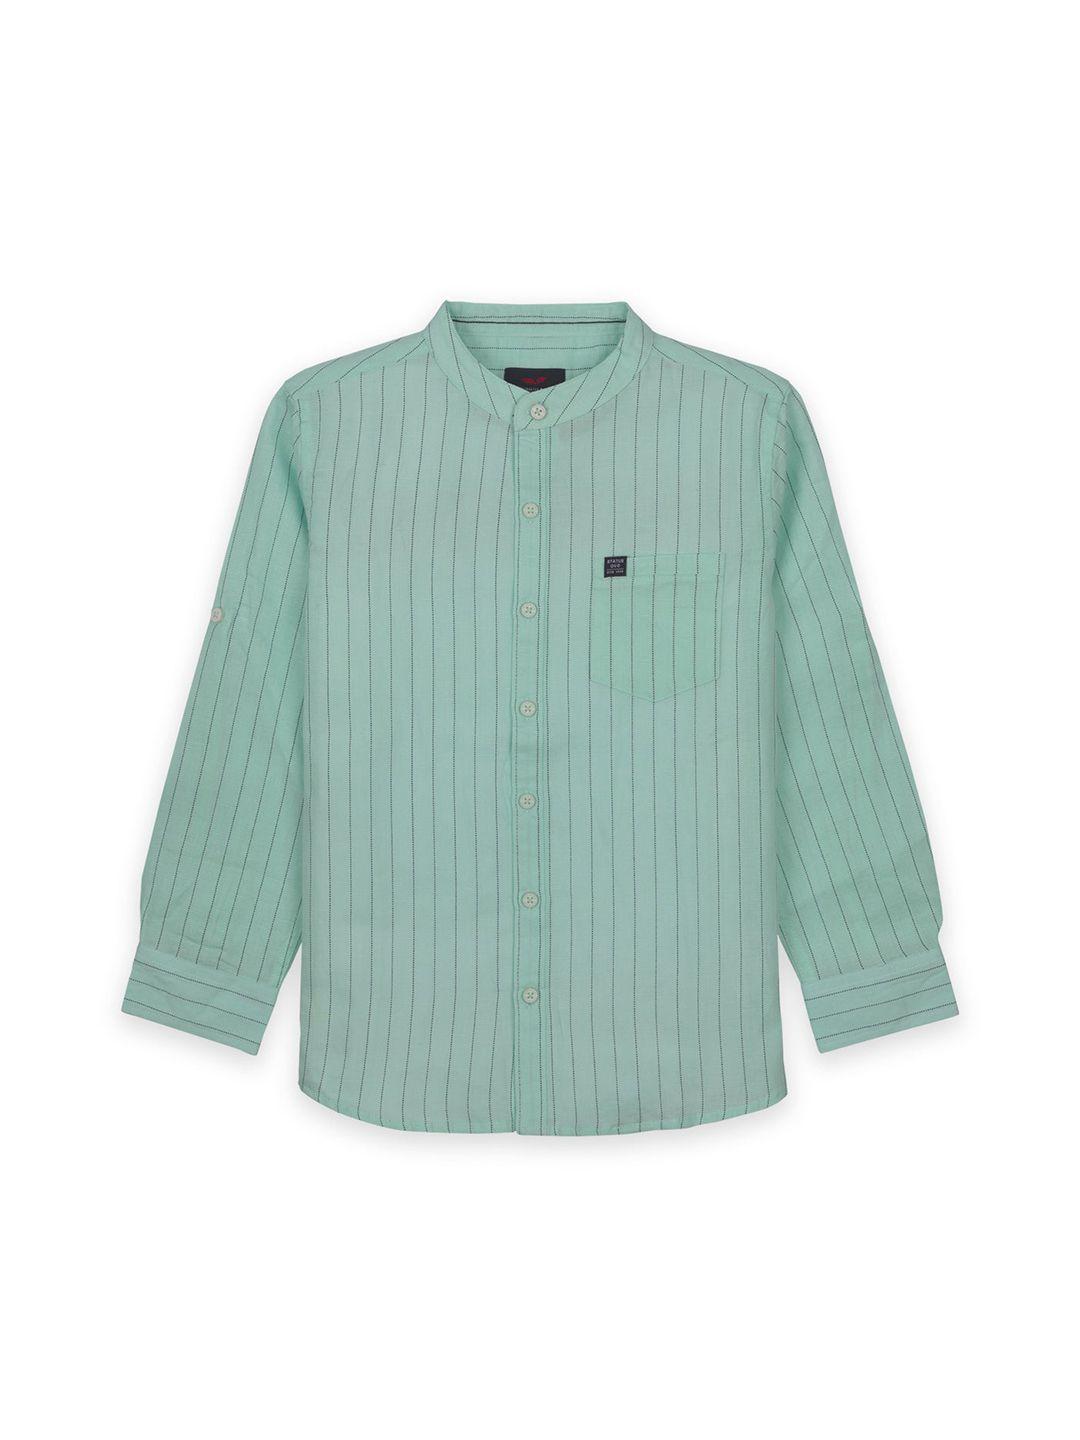 status quo boys green classic striped cotton casual shirt